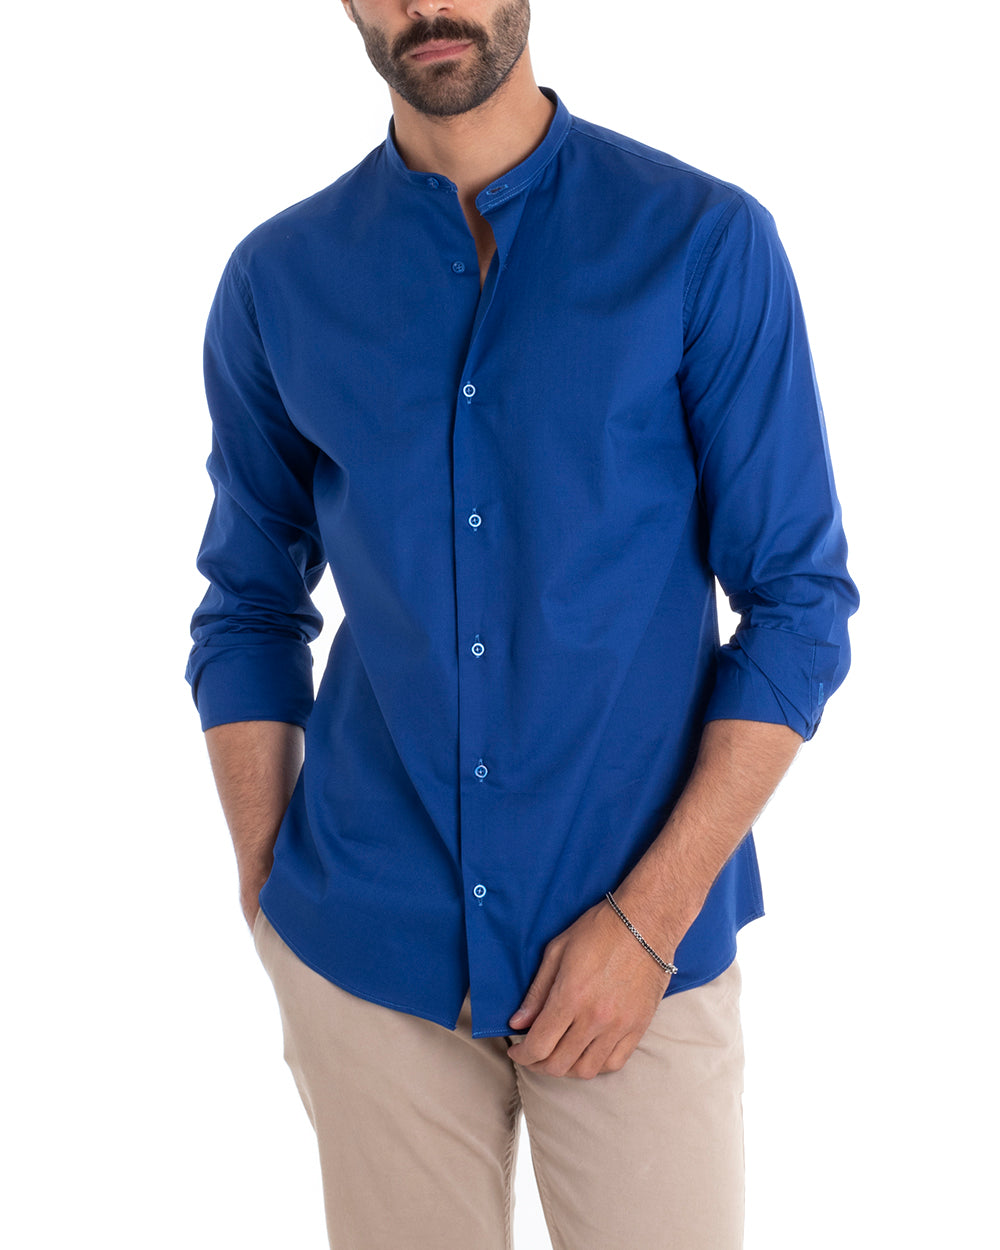 Men's Tailored Shirt Korean Collar Long Sleeve Basic Soft Cotton Royal Blue Regular Fit GIOSAL-C2370A